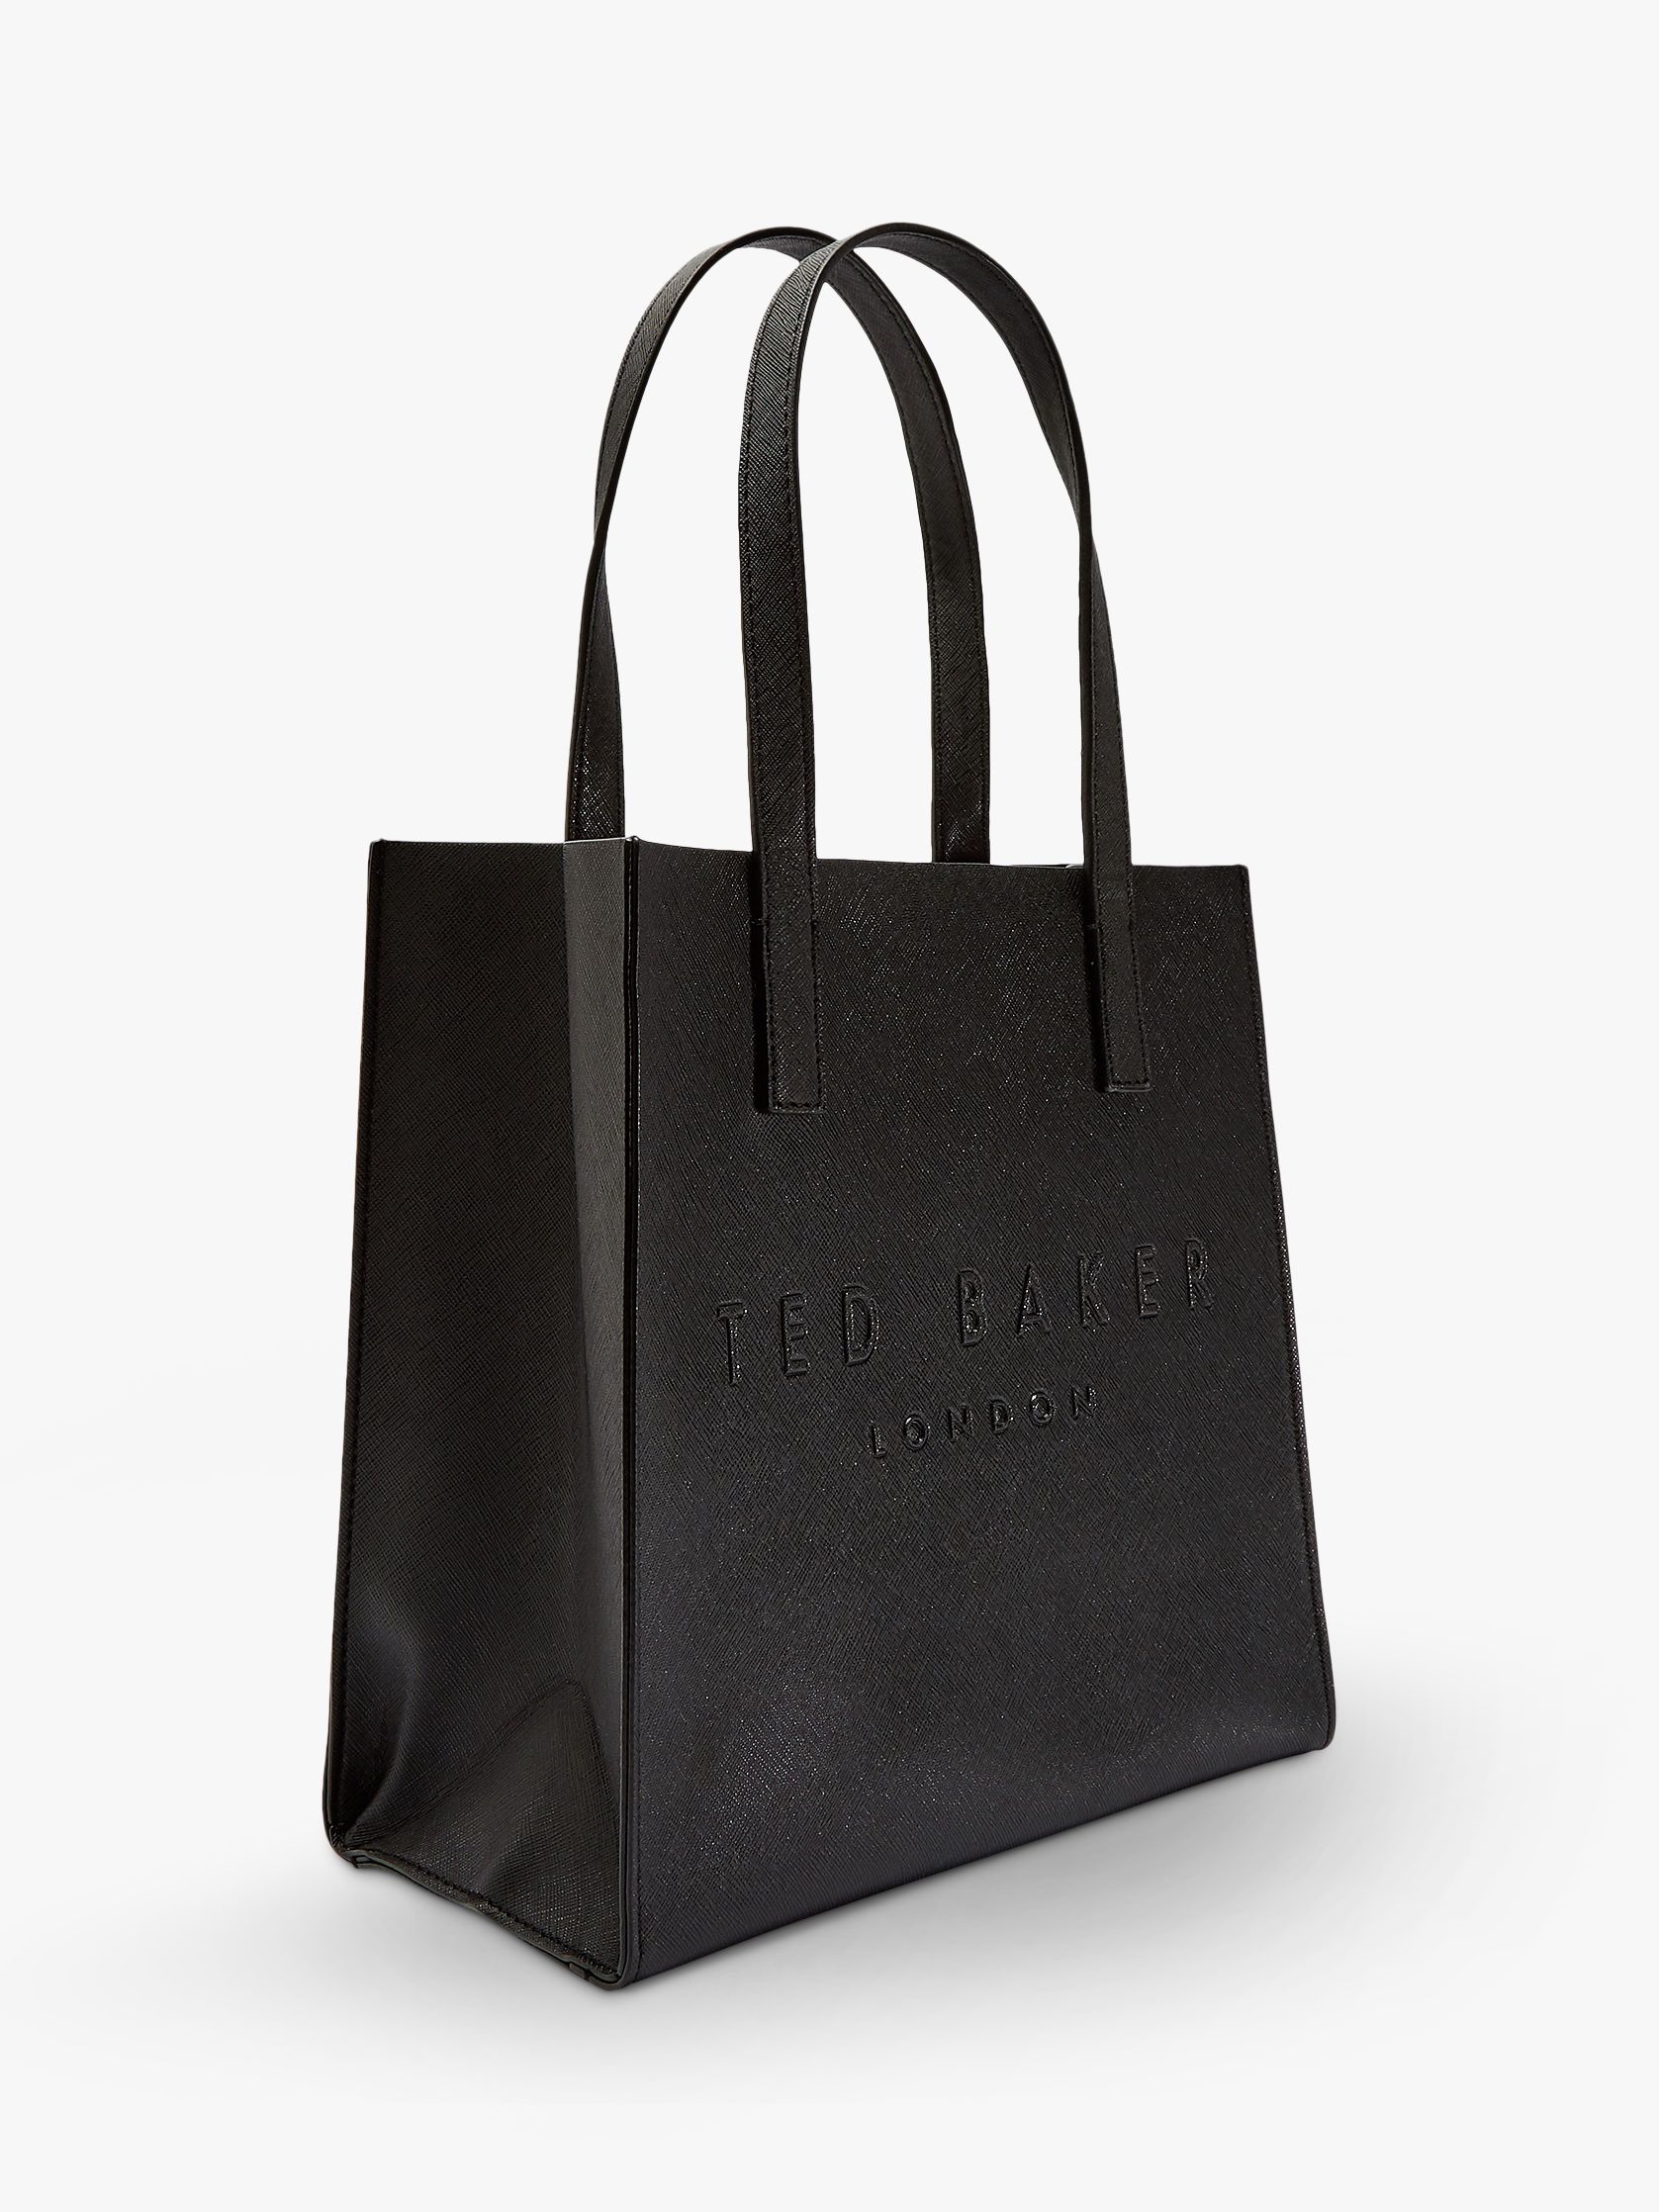 Ted Baker Seacon Shopper Bag, Black at John Lewis & Partners